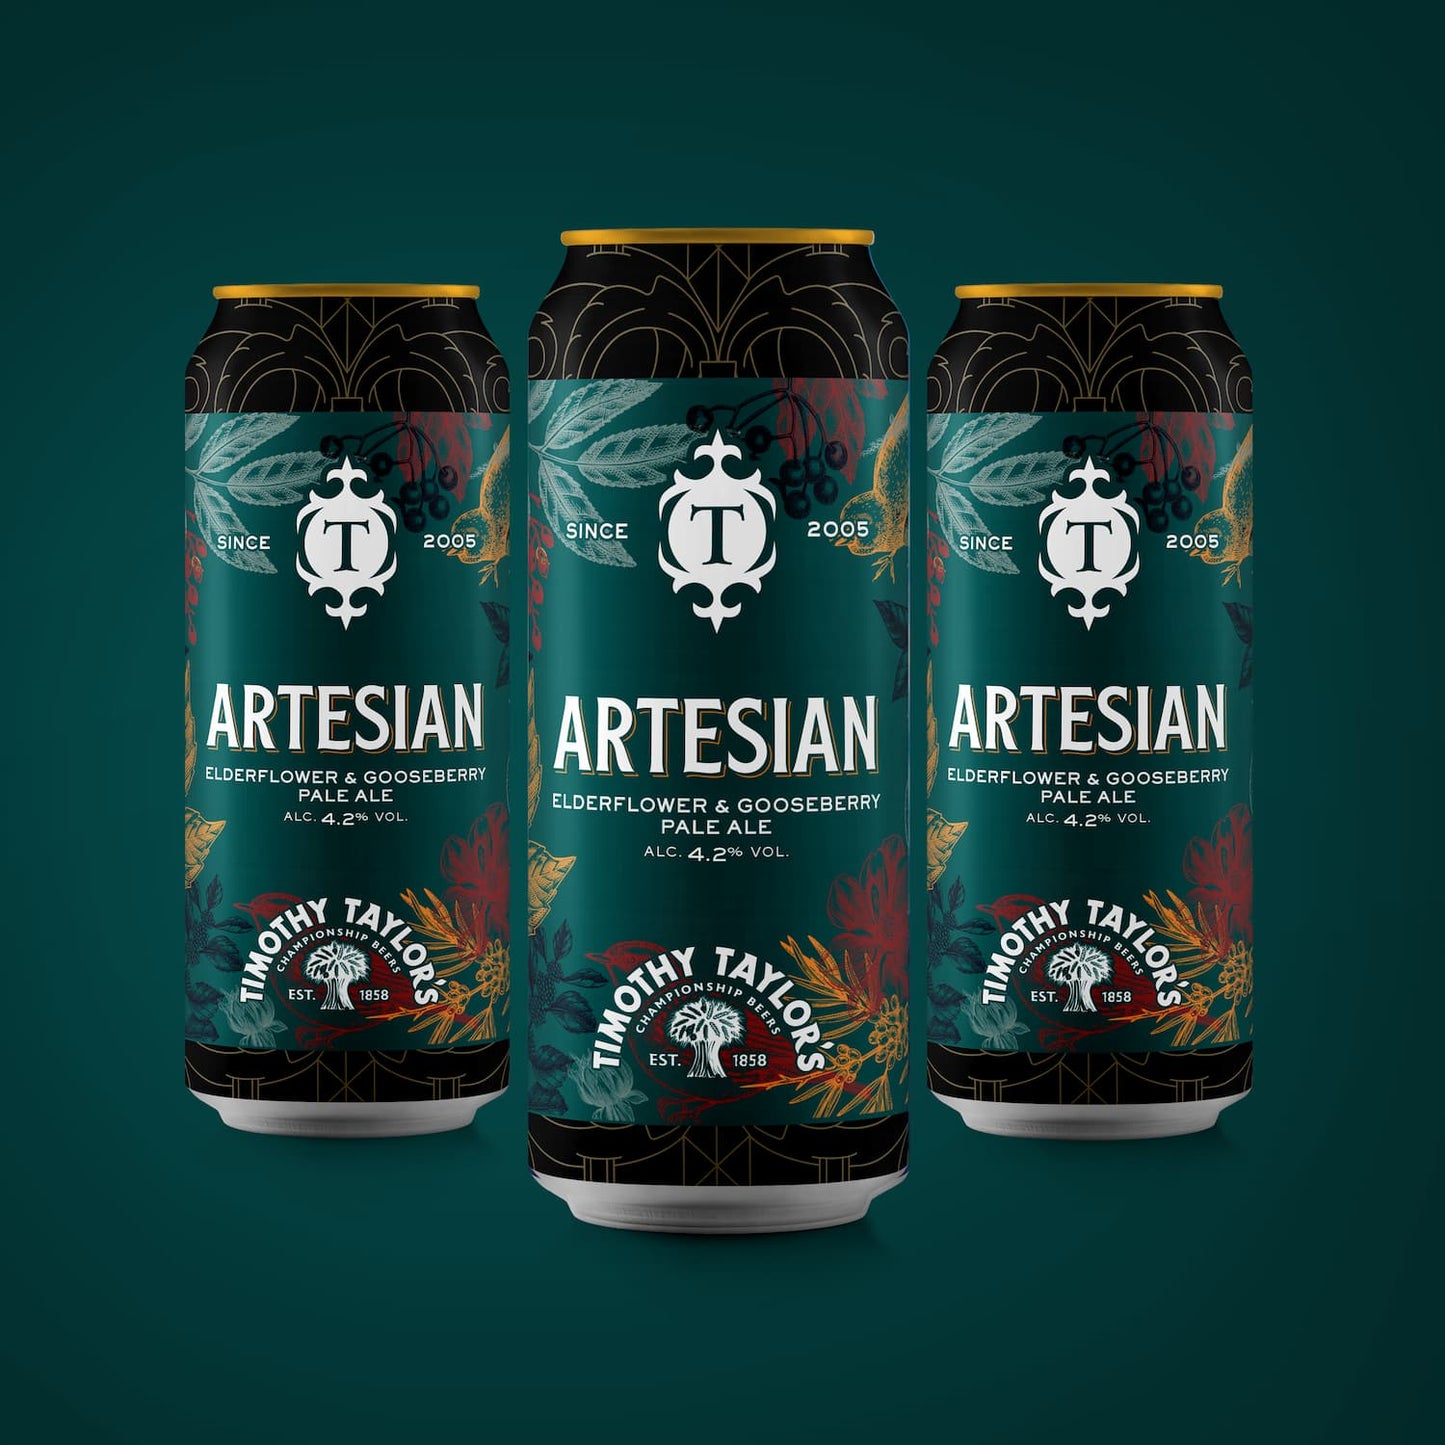 Artesian, 4.2% Elderflower and Gooseberry Pale Ale 12 x 440ml cans Beer - Case Cans Thornbridge